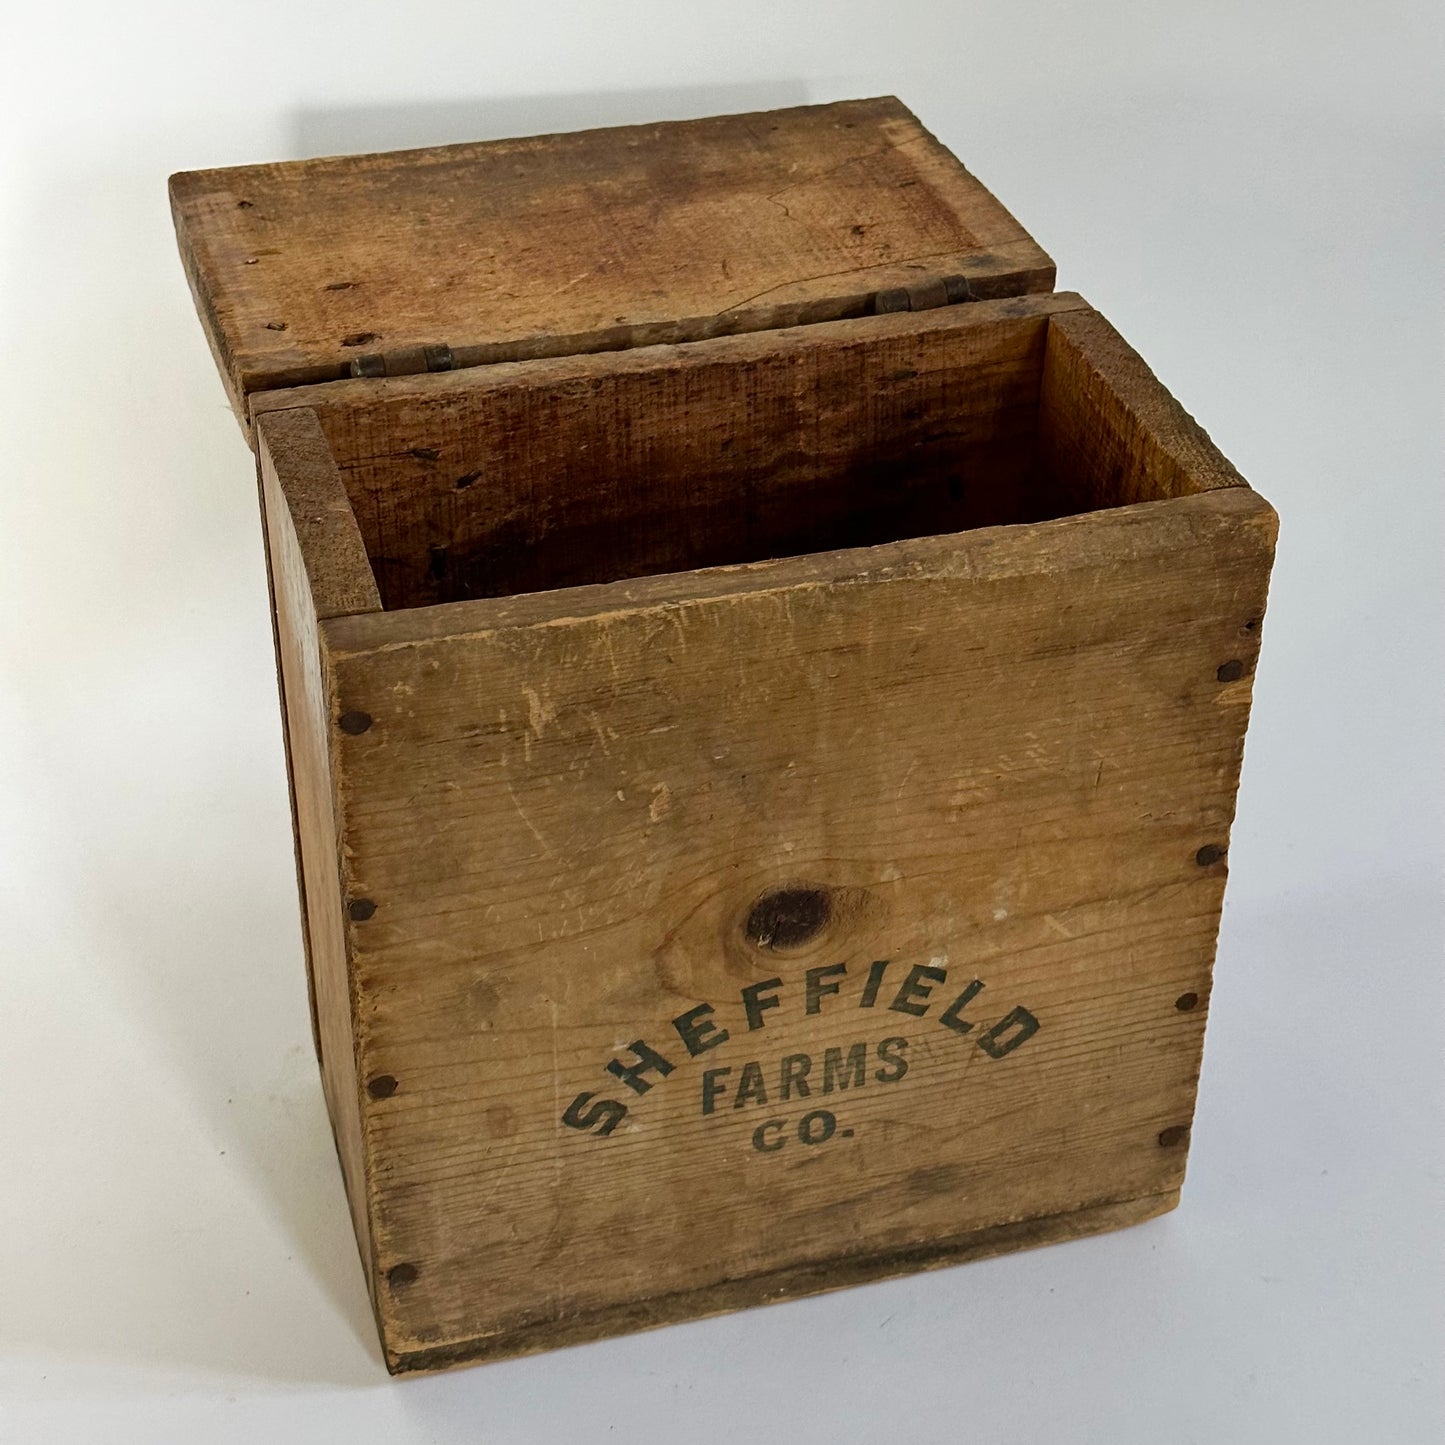 Sheffield Farms milk box